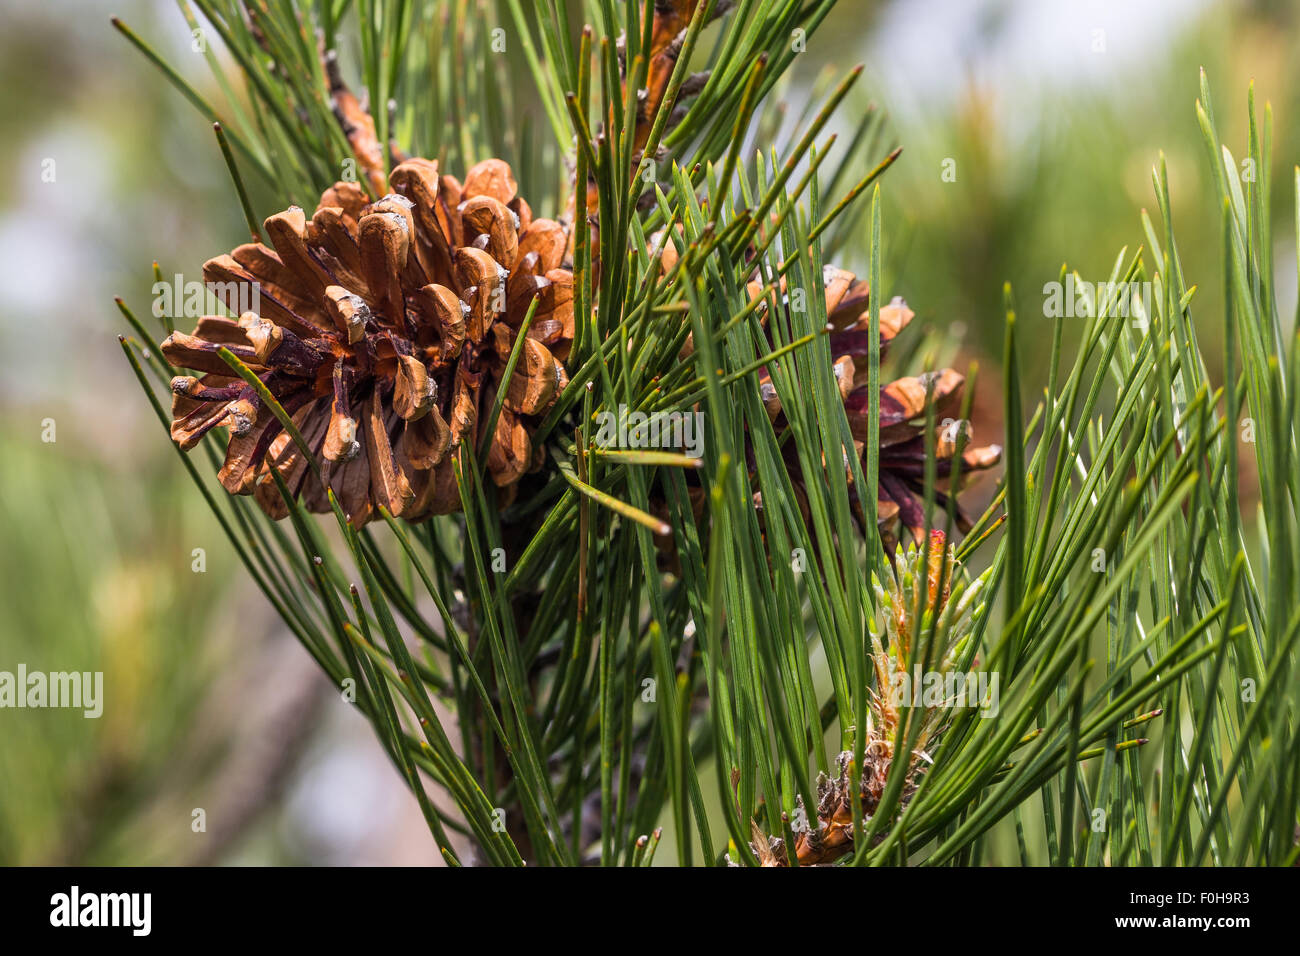 Pino laricio. Pinus nigra laricio. Black pine. Volcano Etna. Sicily, Italy, Europe. Stock Photo